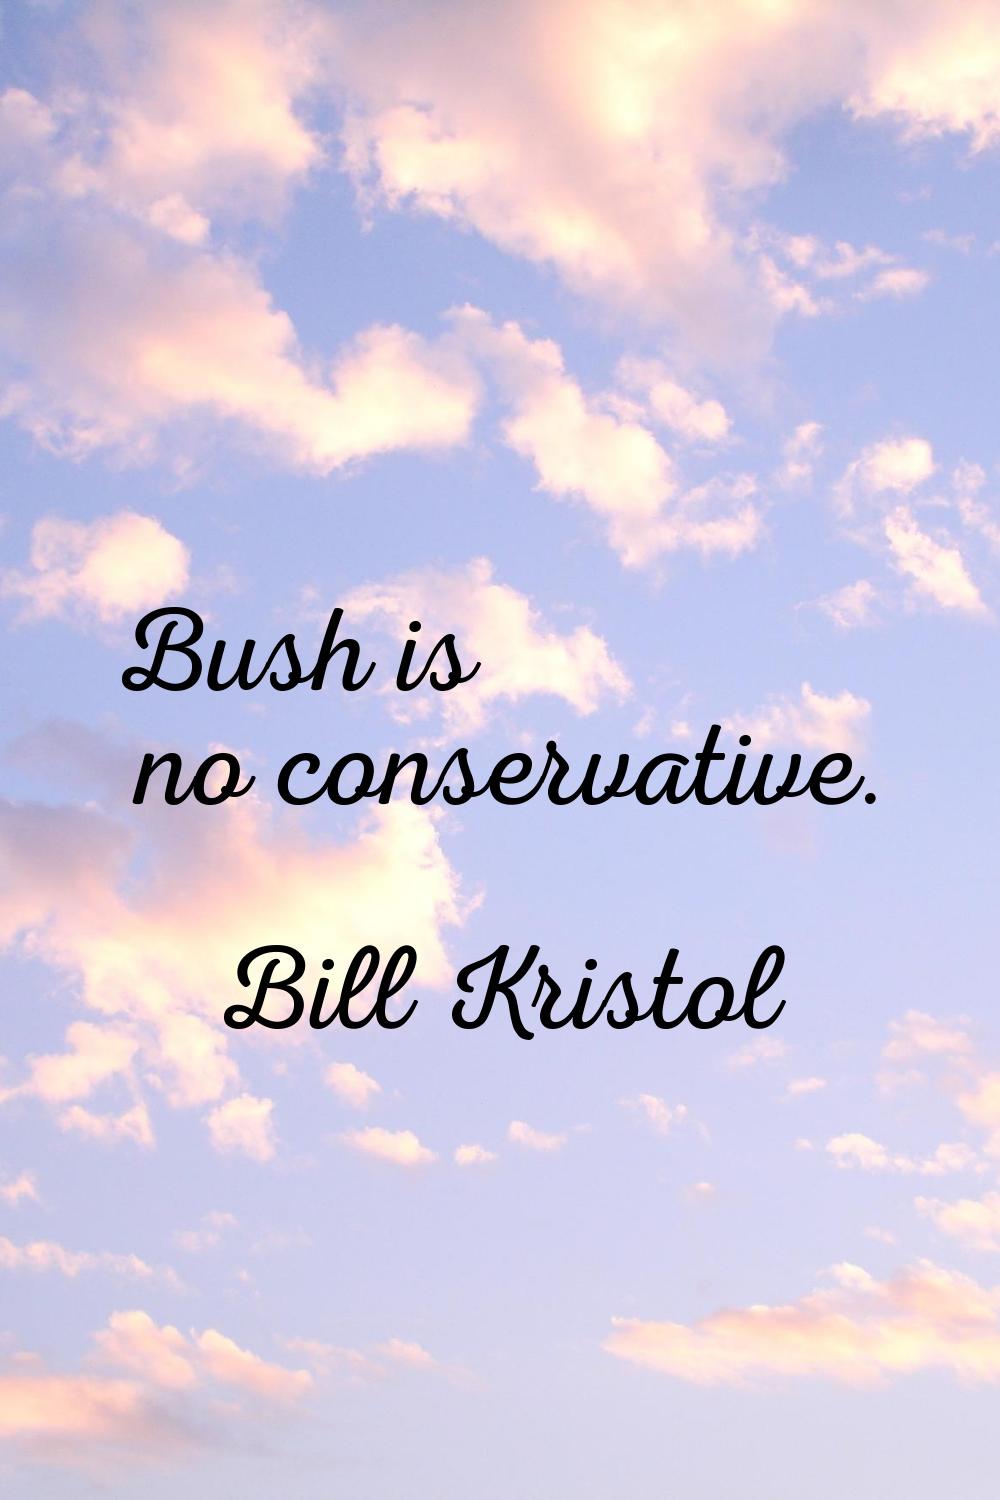 Bush is no conservative.